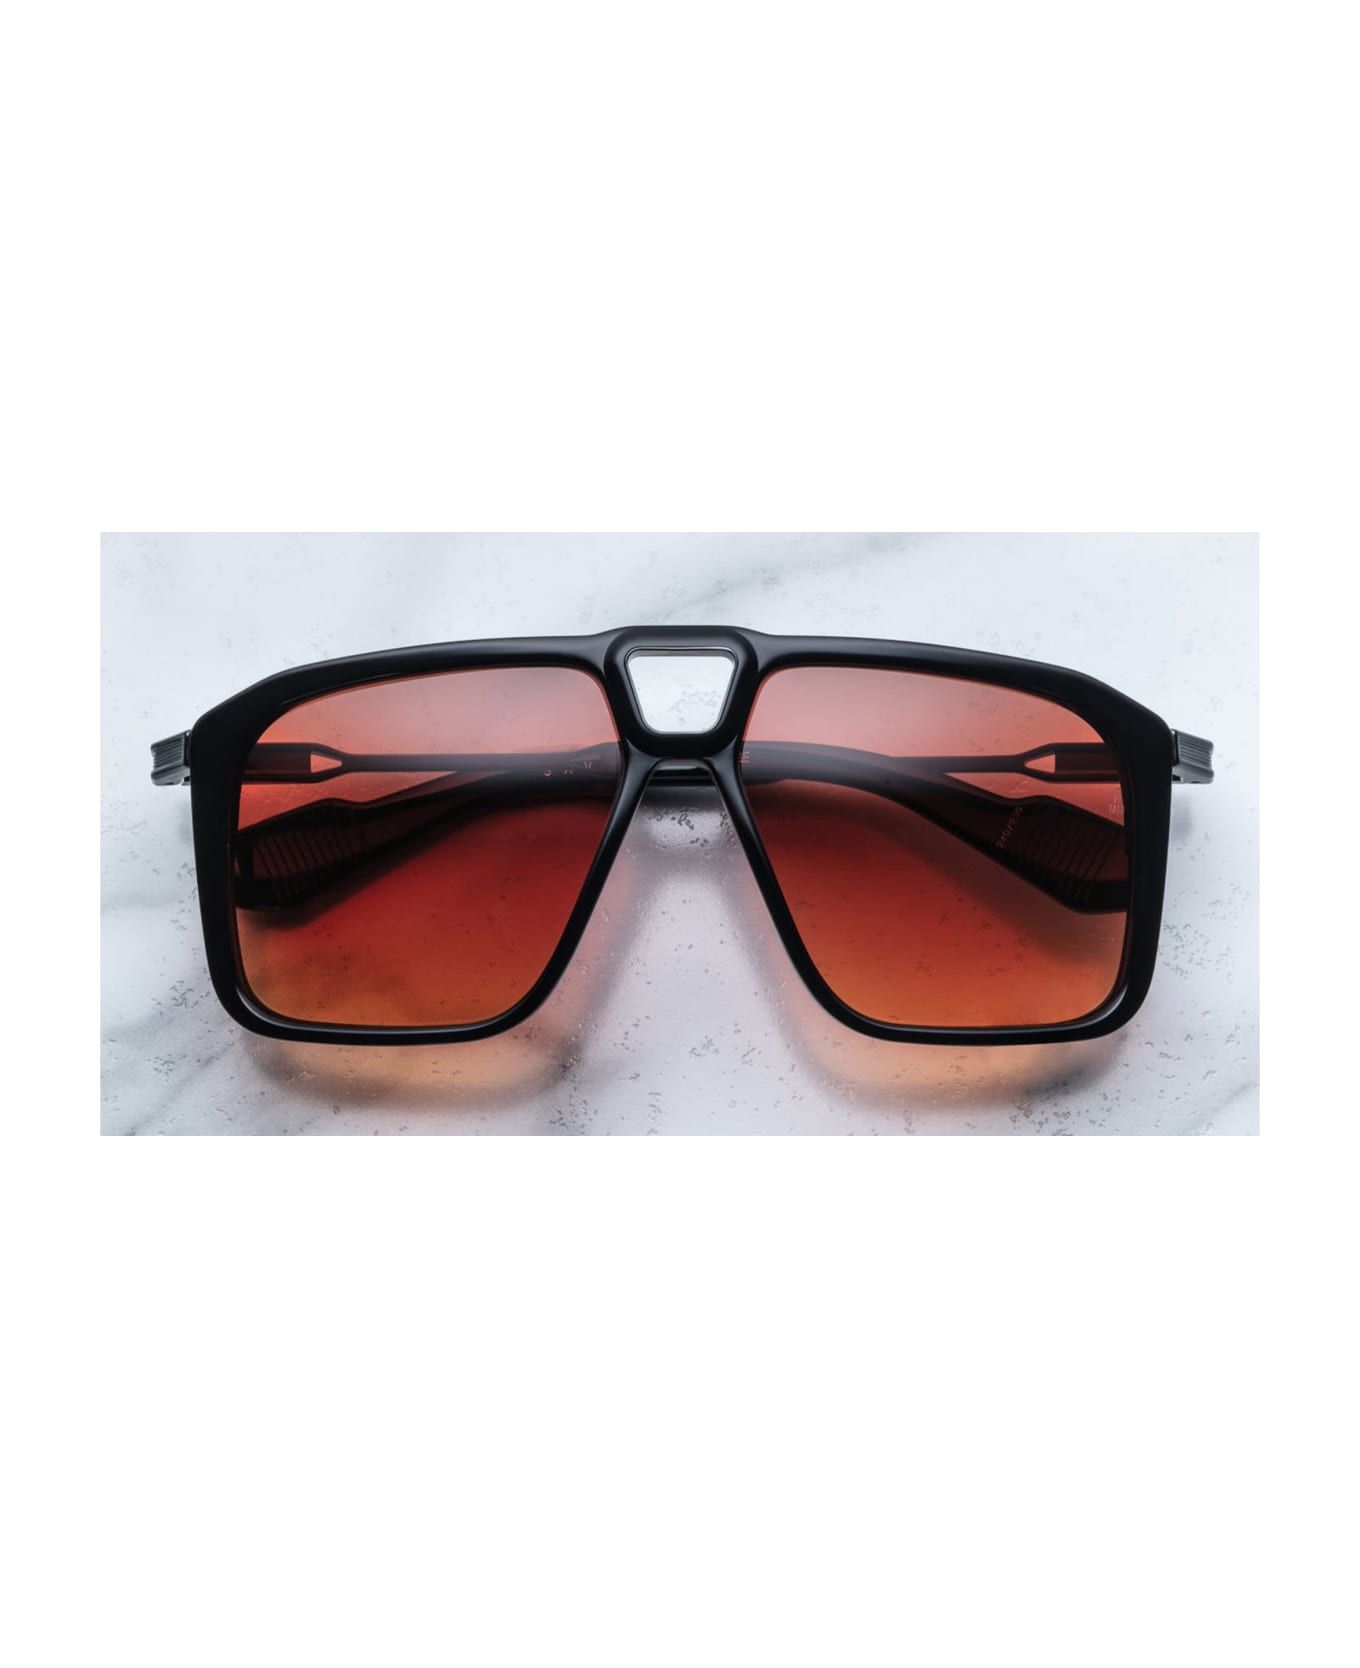 Loewe Gold Square Sunglasses Savoy - Tropic Sunglasses - Black